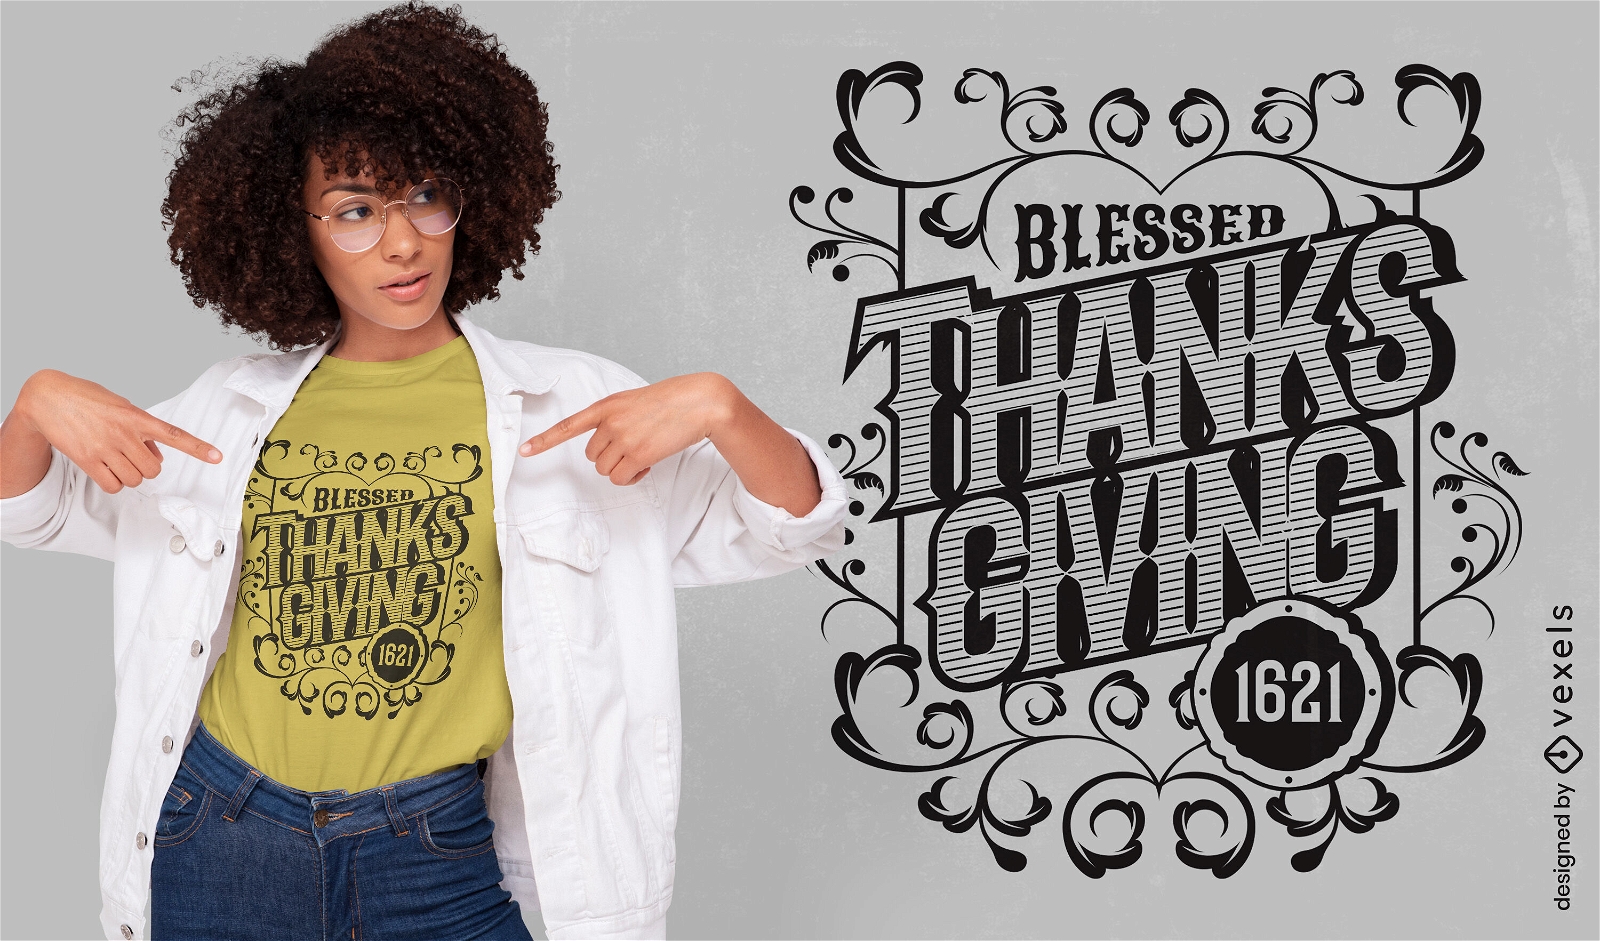 Blessed thanksgiving vintage t-shirt design